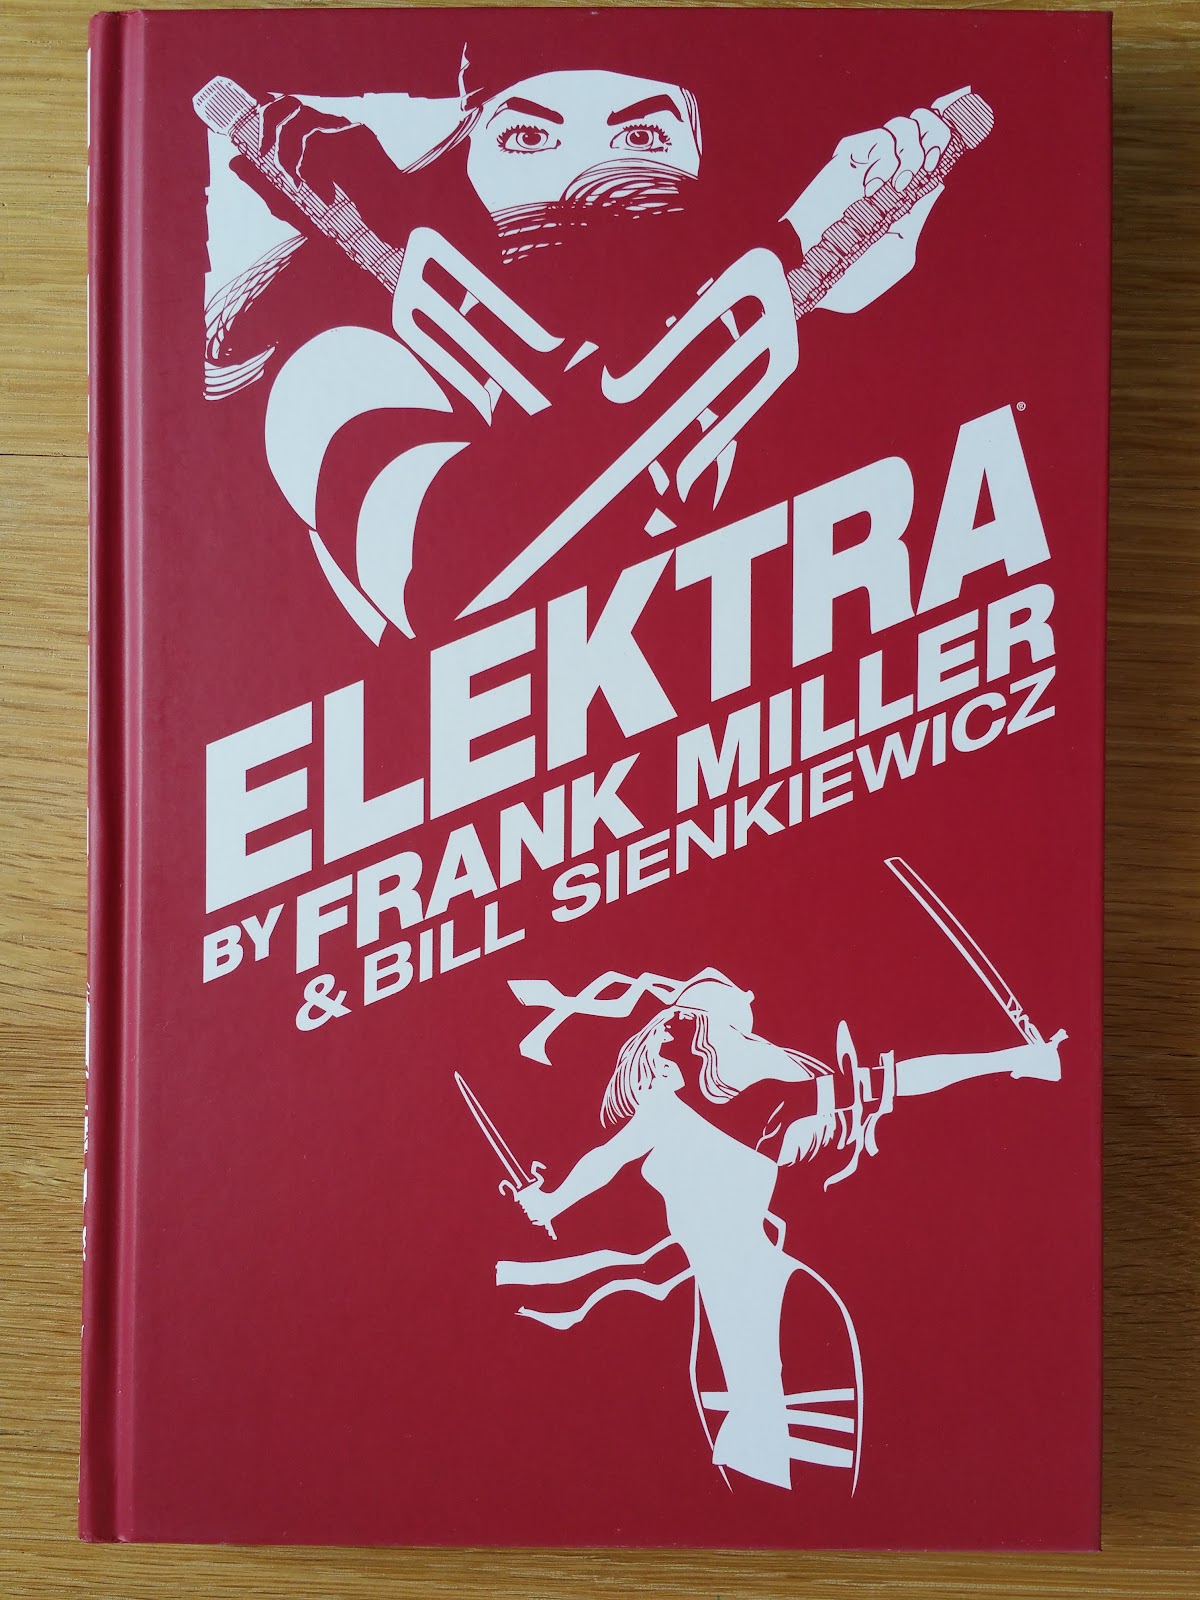 Elektra Vive (Em Portugues do Brasil): Frank Miller: 9788583682530:  : Books